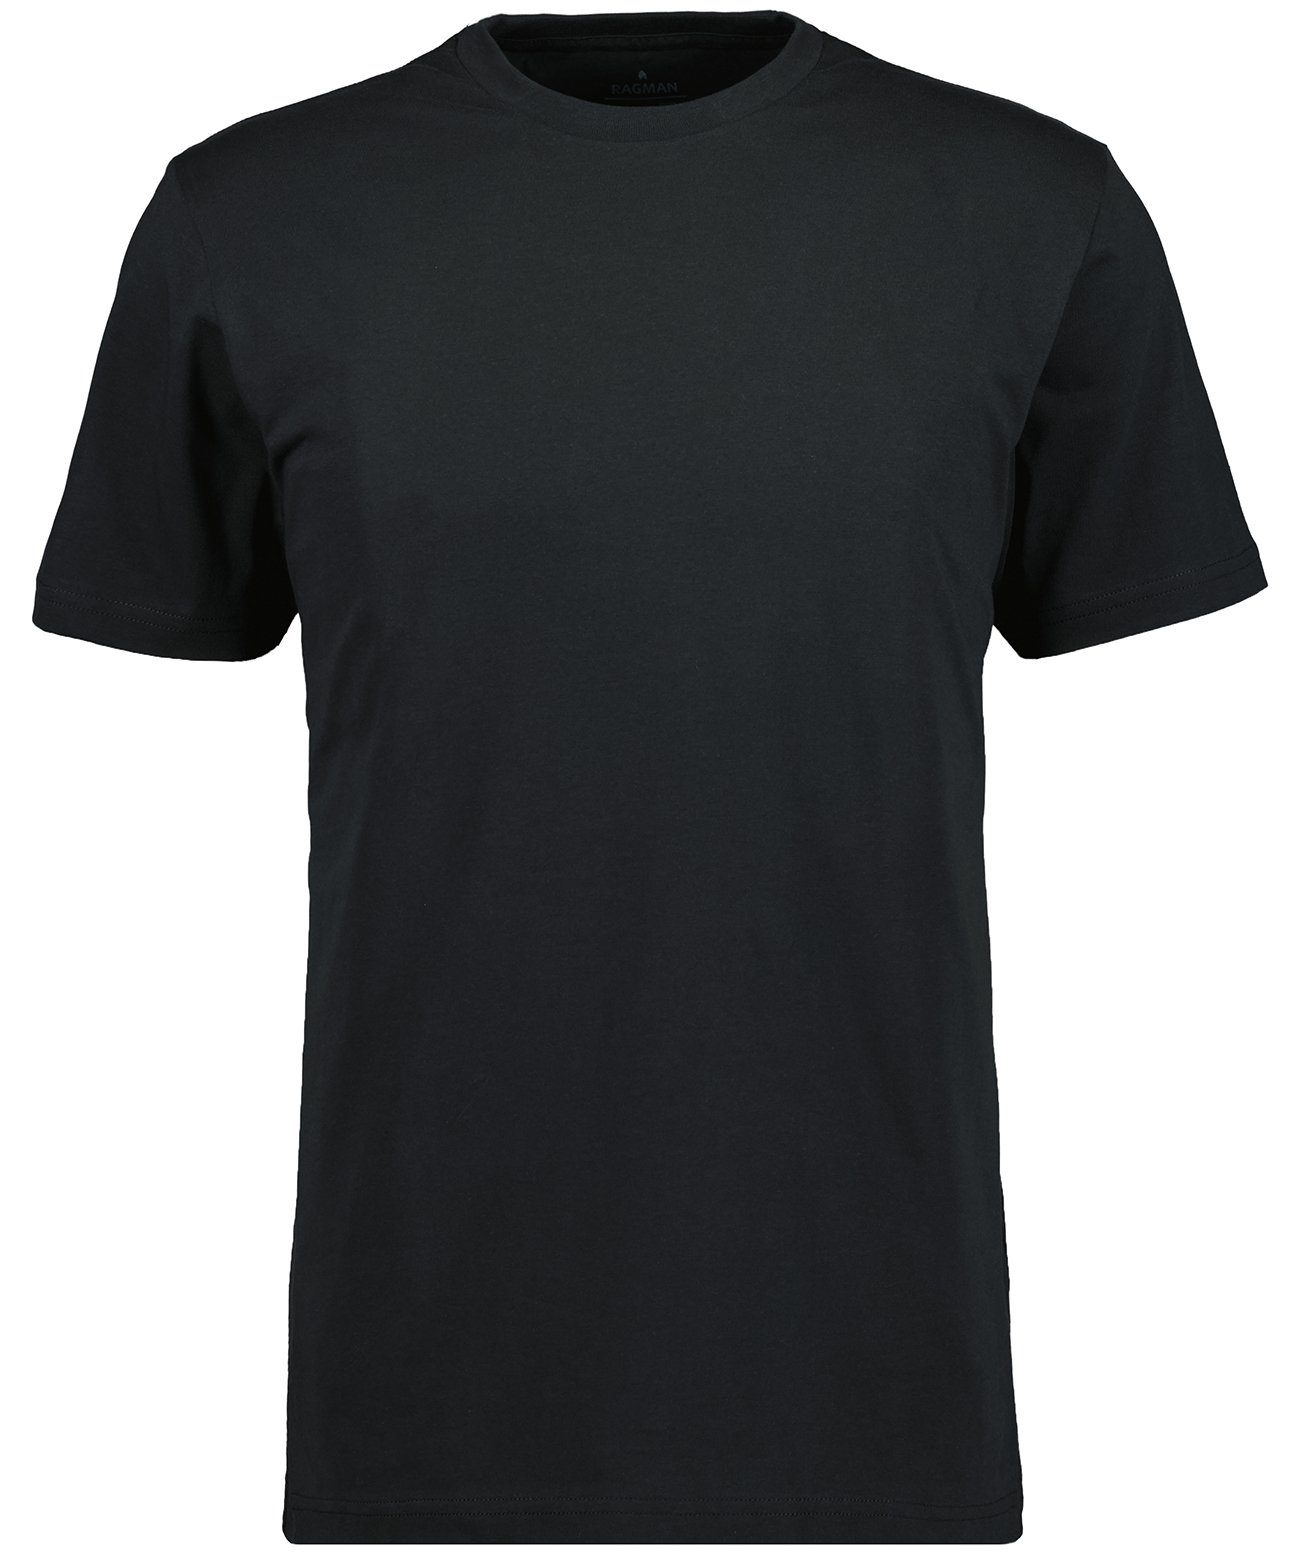 RAGMAN T-Shirt Schwarz